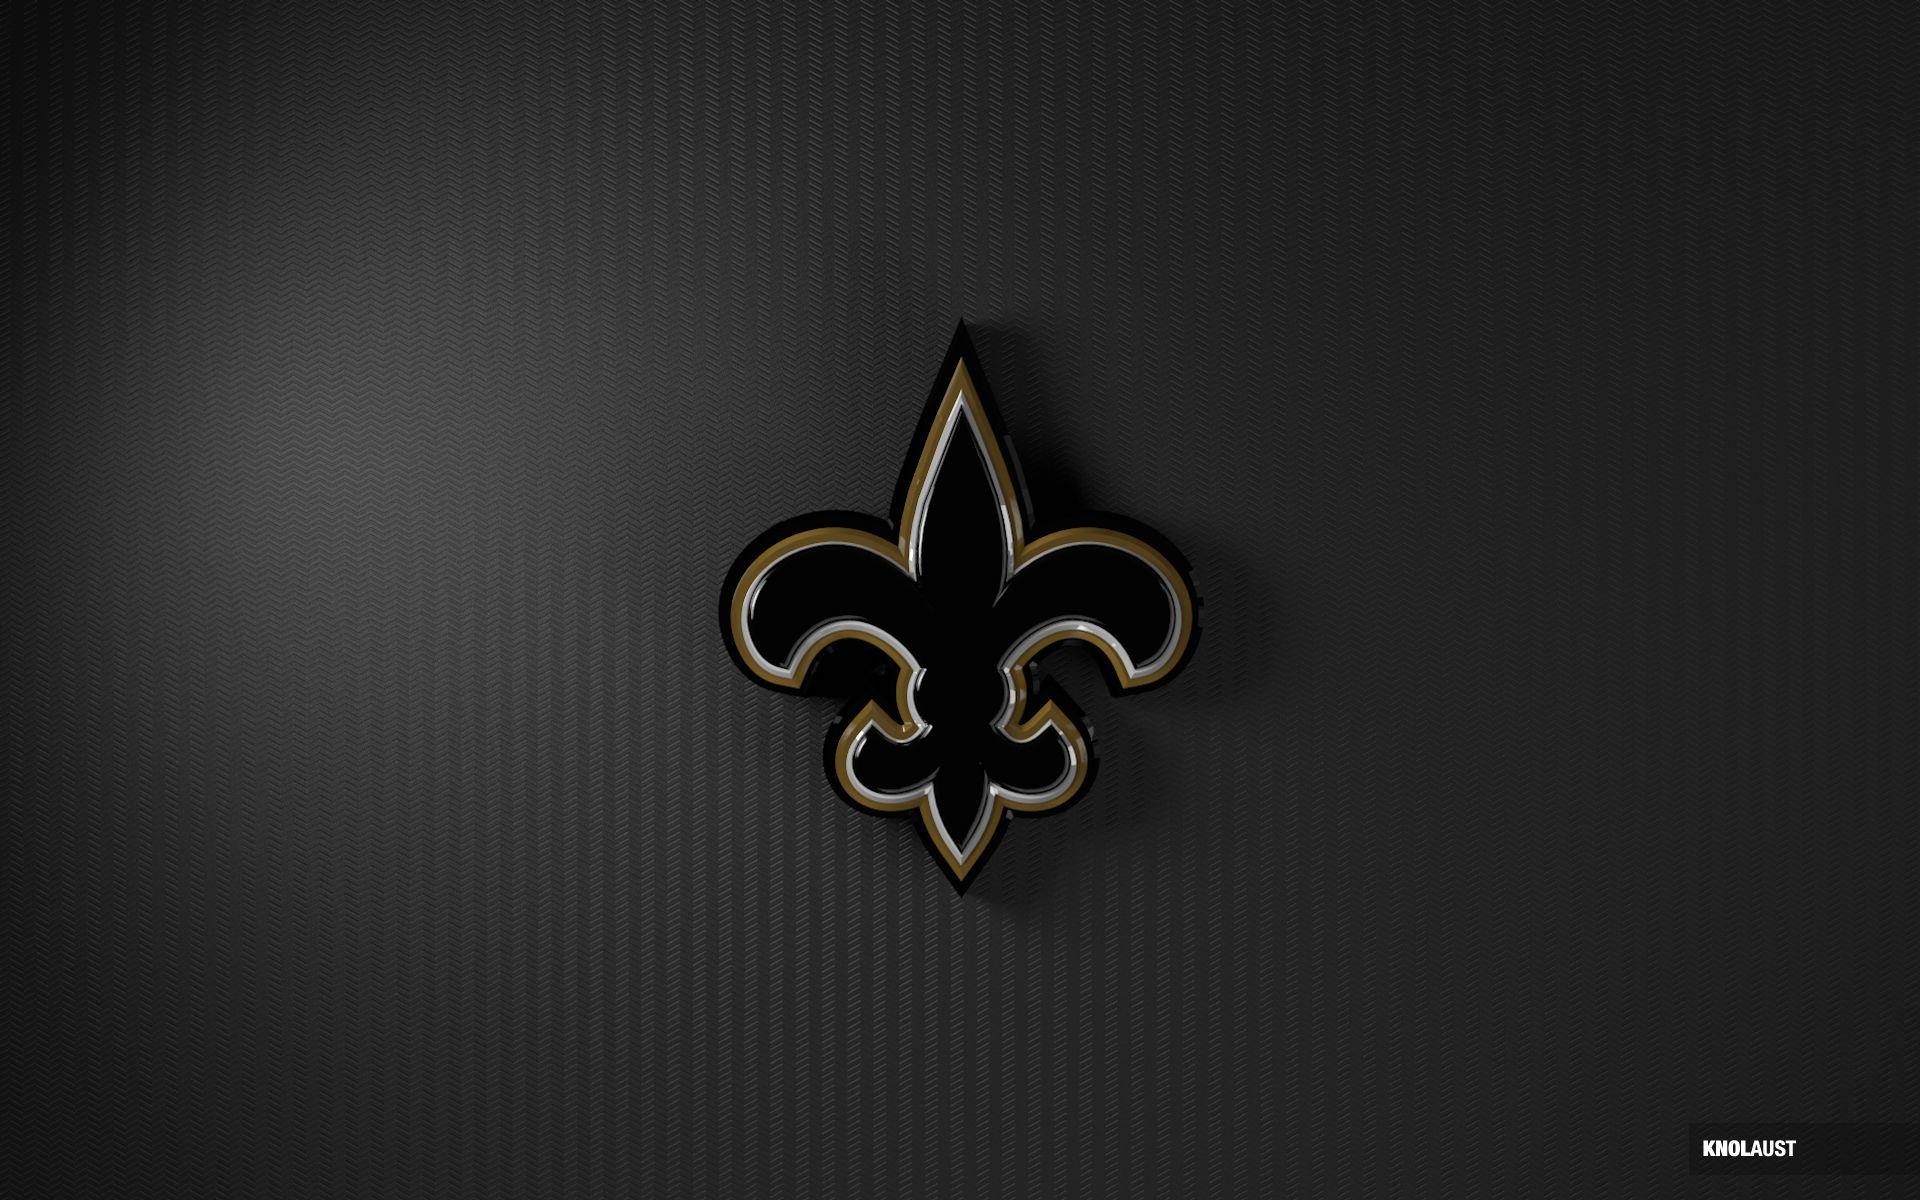 Wallpaper ID 397023  Sports New Orleans Saints Phone Wallpaper Logo  Emblem NFL 1080x1920 free download